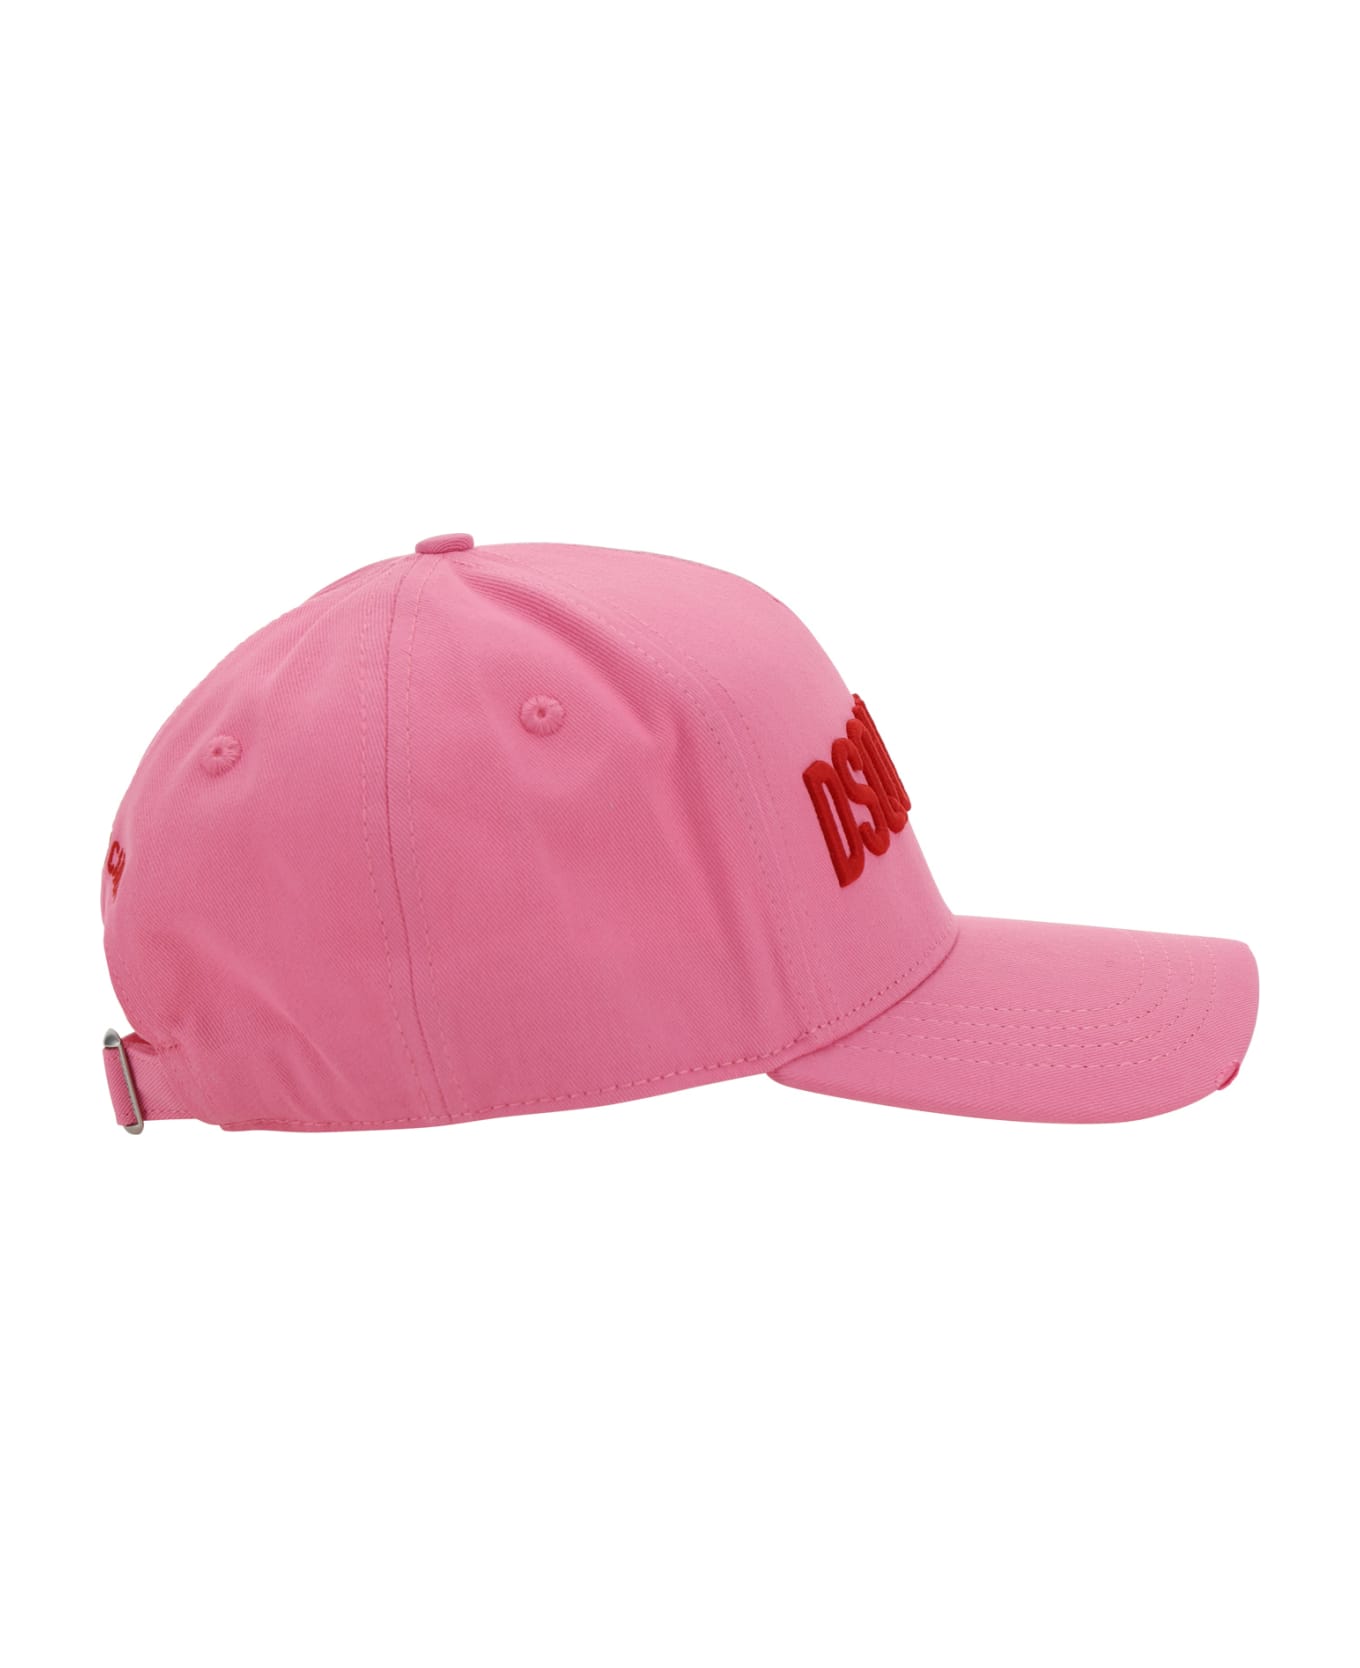 Dsquared2 Wm Baseball Cap - M1486 帽子